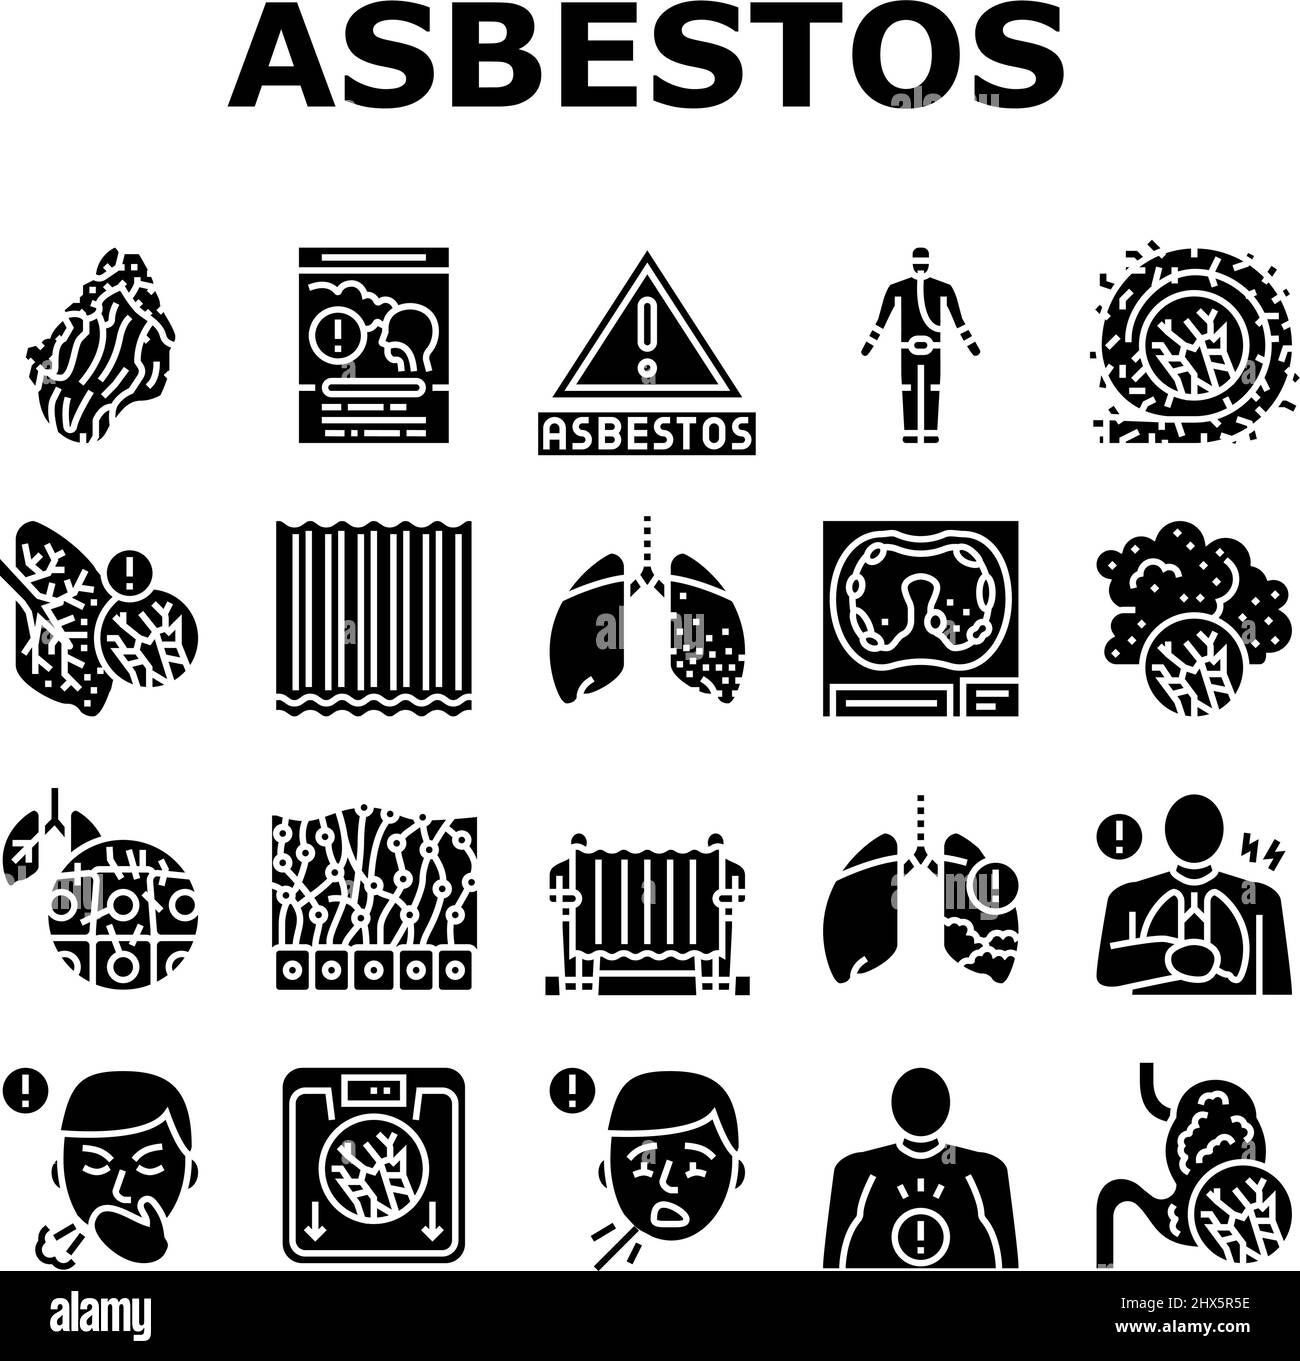 Asbestmaterial Und Problemsymbole Setzen Vektor Stock Vektor